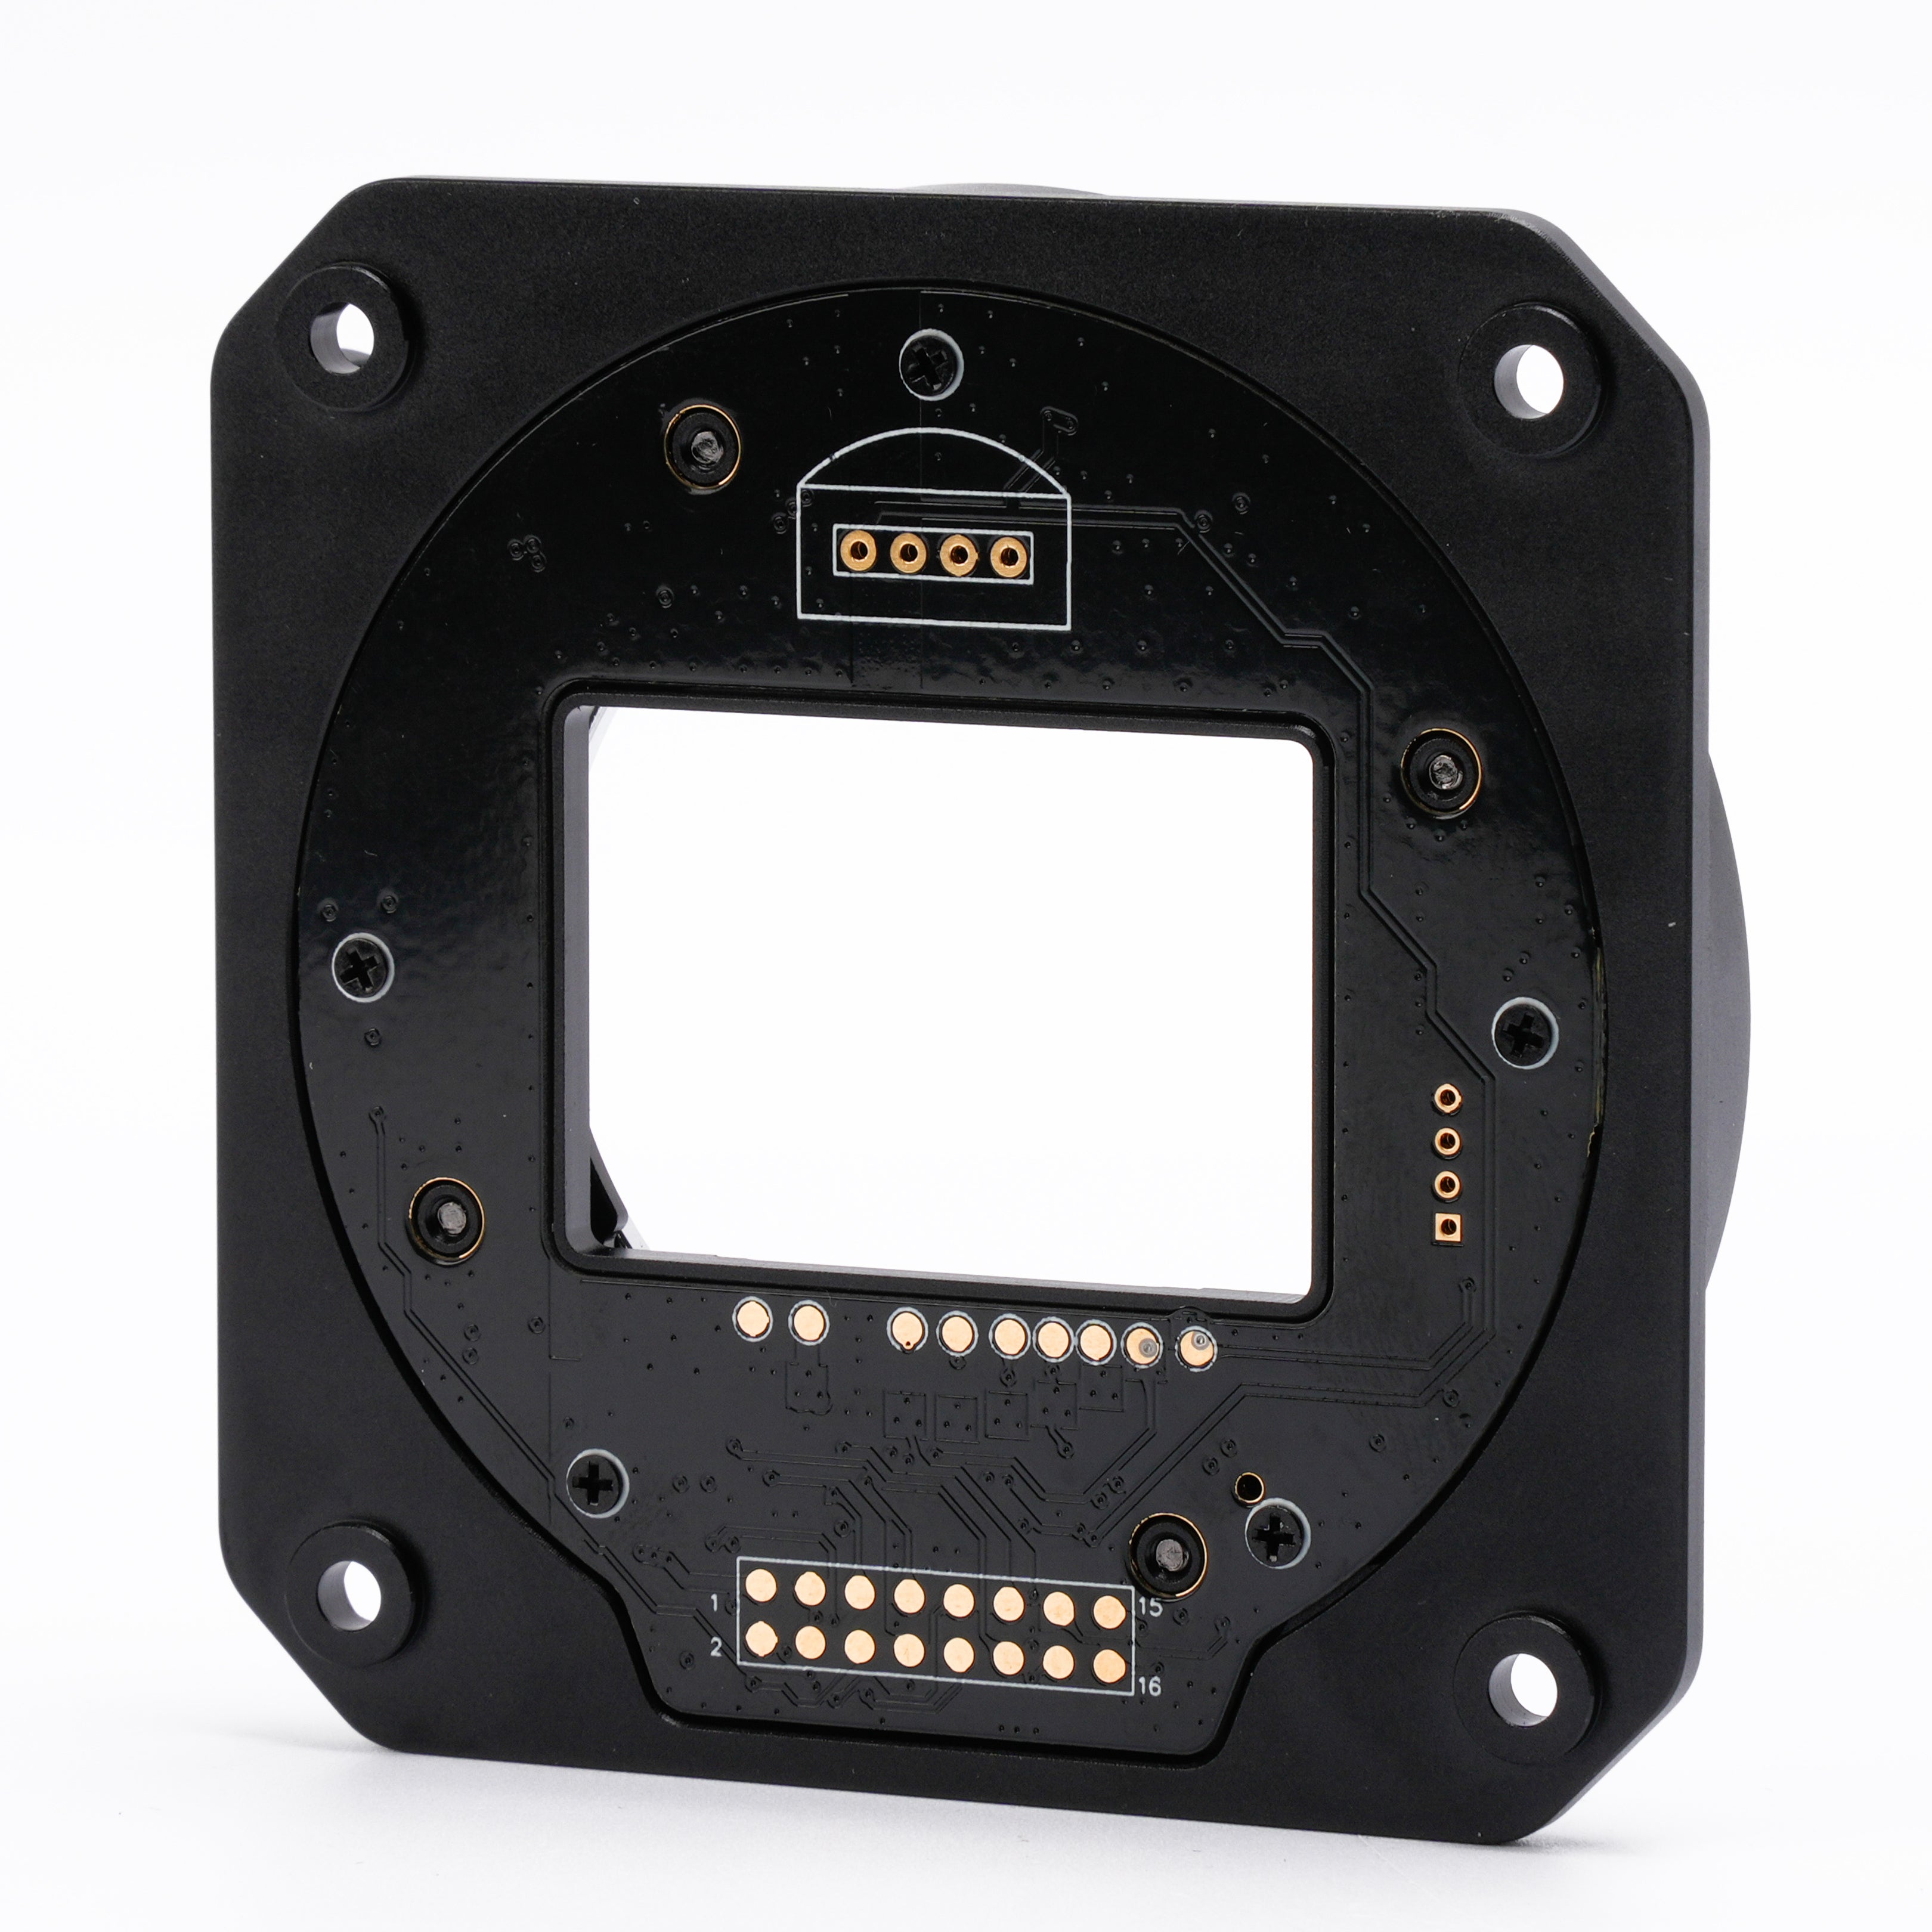 VILTROX E-T10 II Auto Focus Adapter Ring For Sony E-mount Lens Transfer to Z CAM (E2-F6) Cine Camera